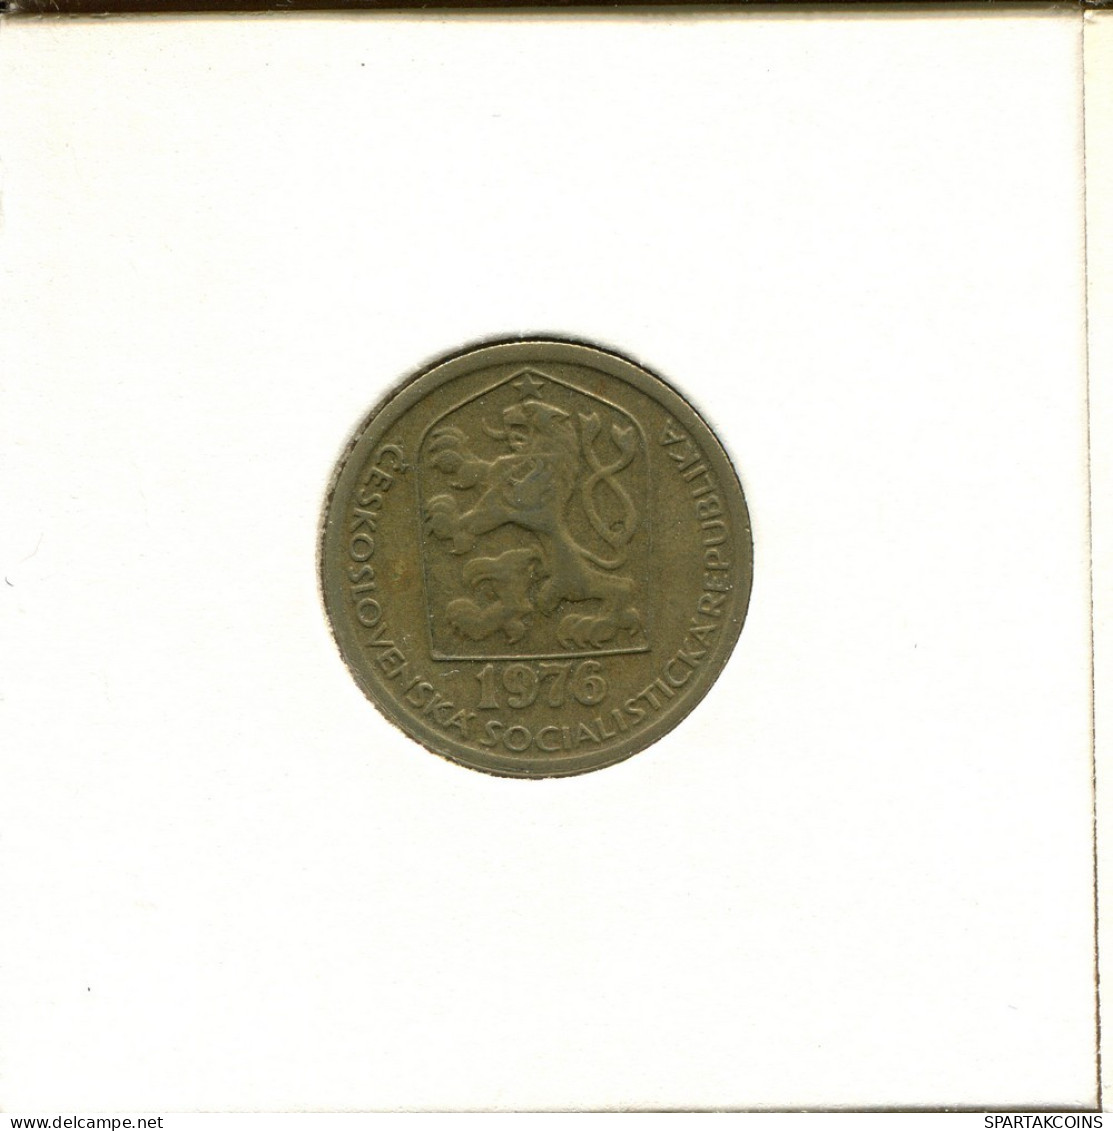 20 HALERU 1976 CZECHOSLOVAKIA Coin #AS945.U.A - Tschechoslowakei